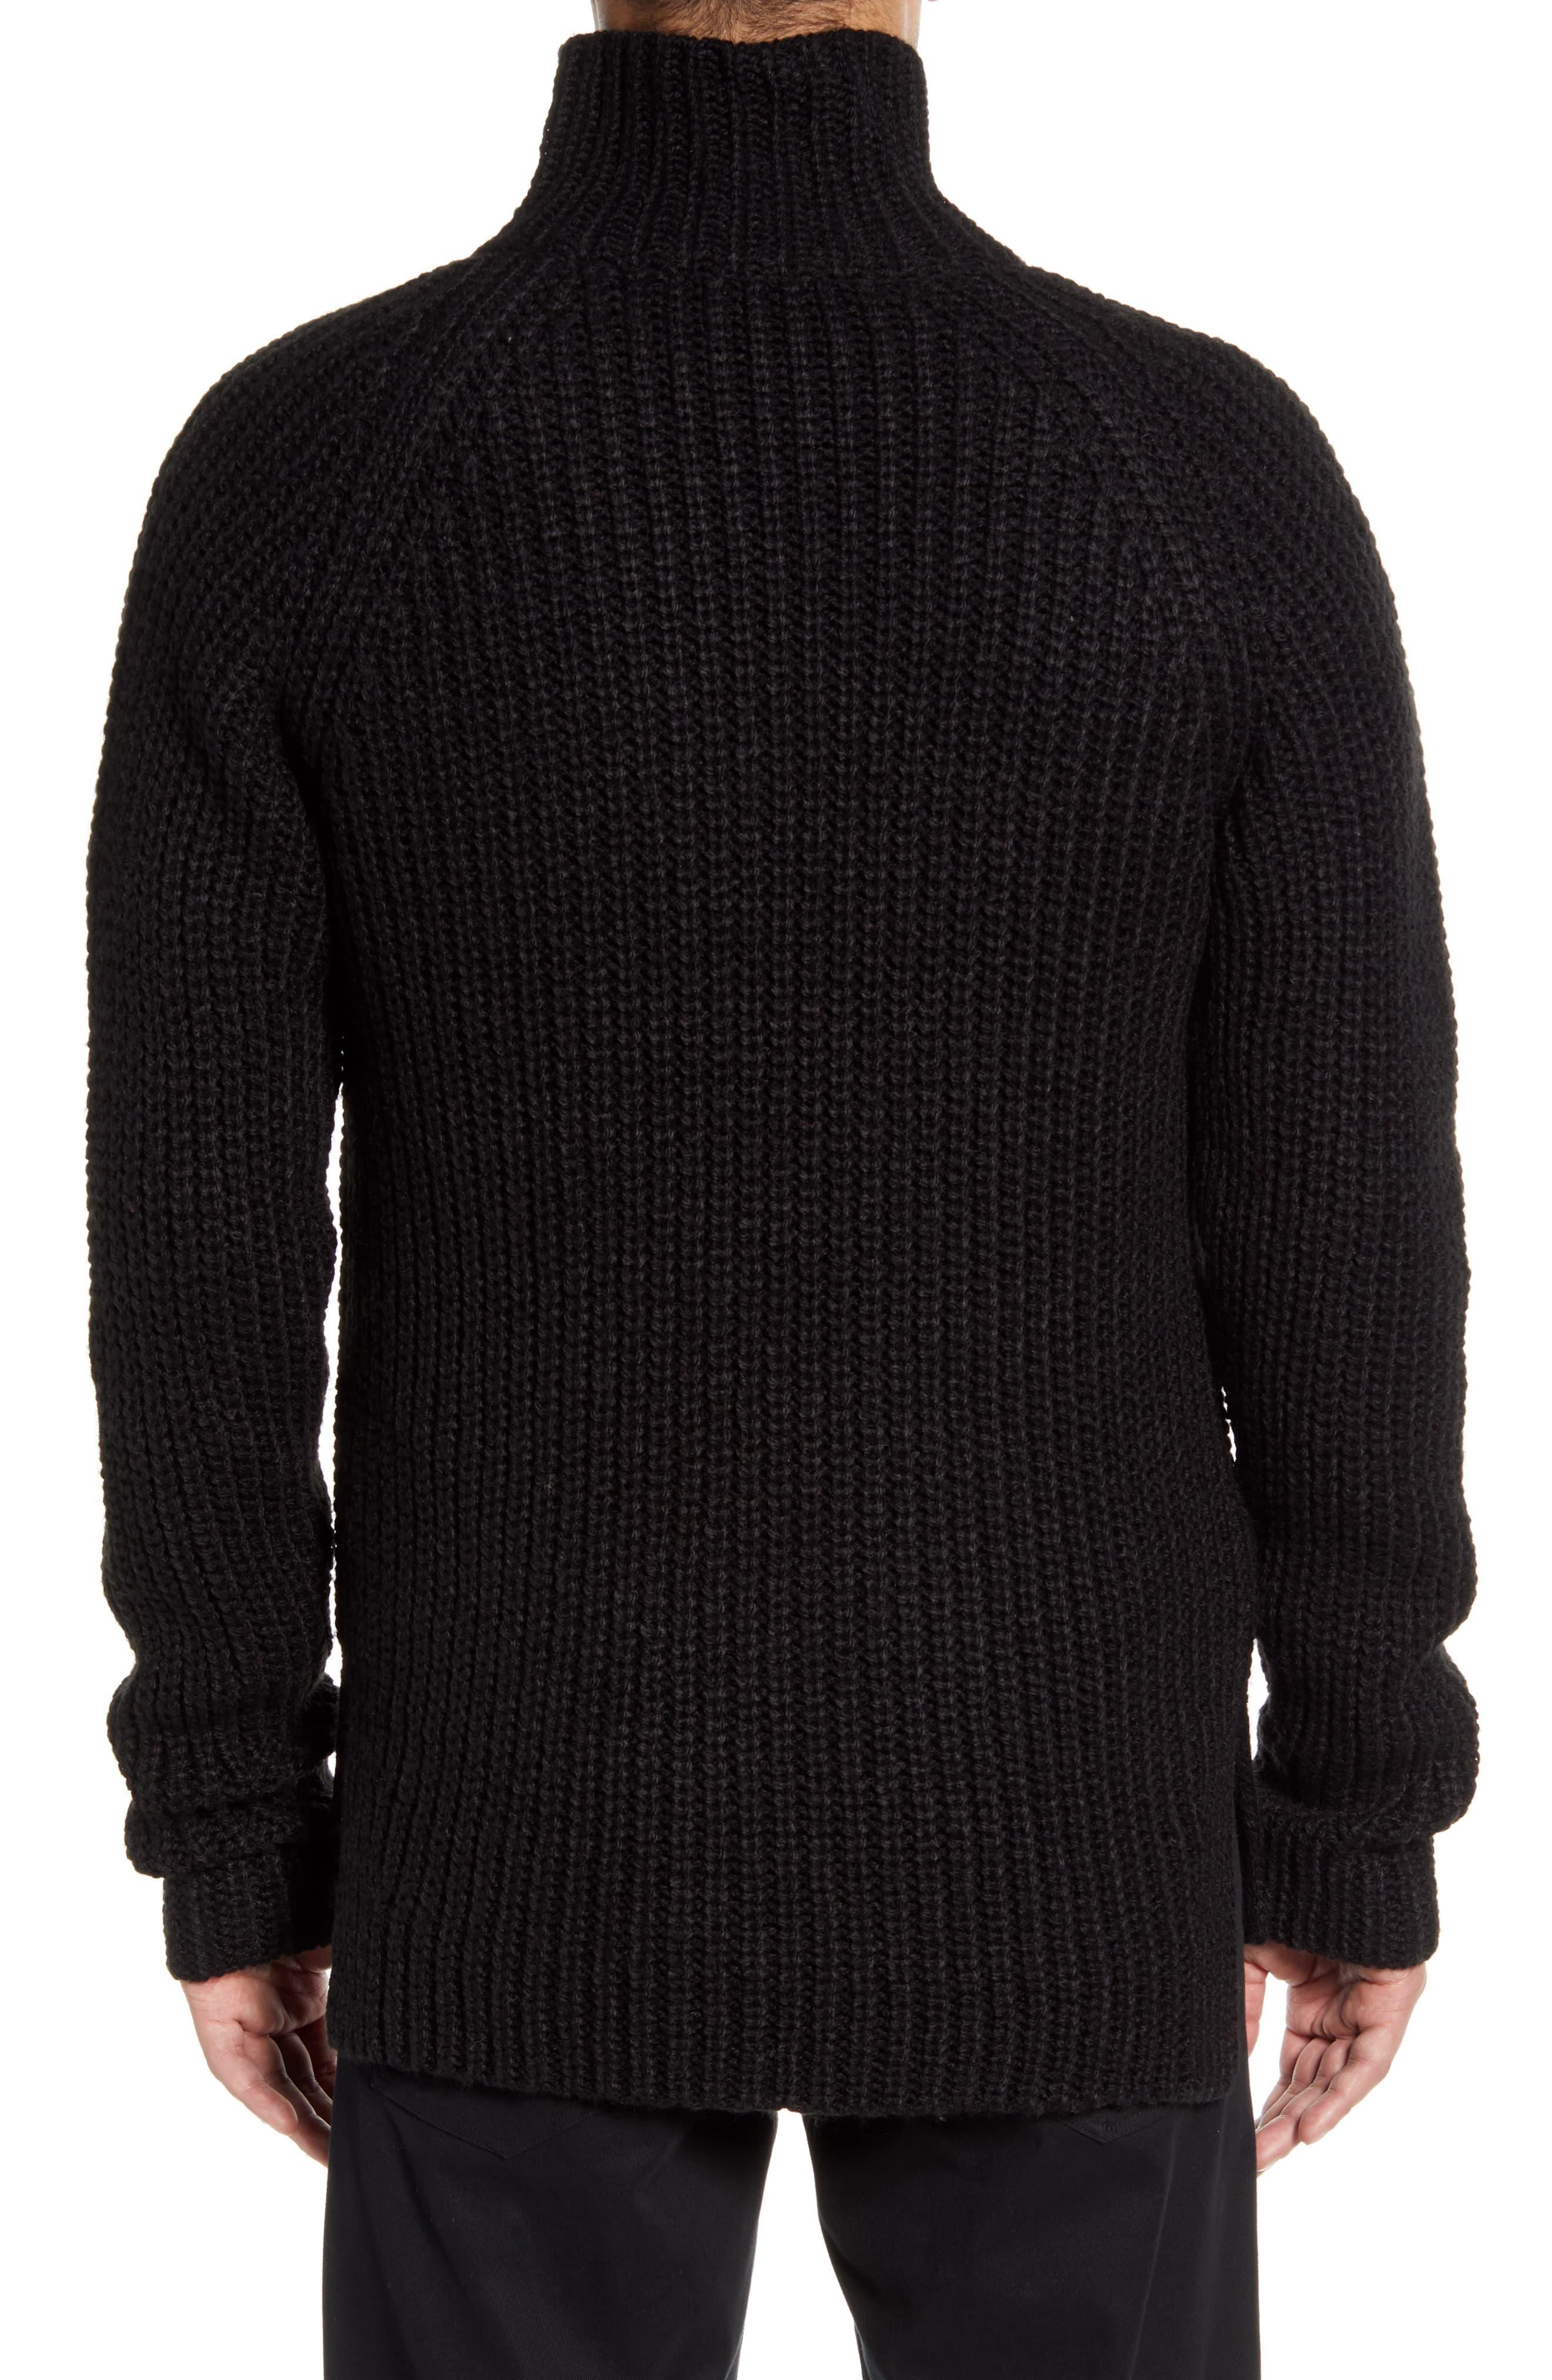 Karl Lagerfeld Chunky Zip Turtleneck Sweater in Black for Men - Lyst